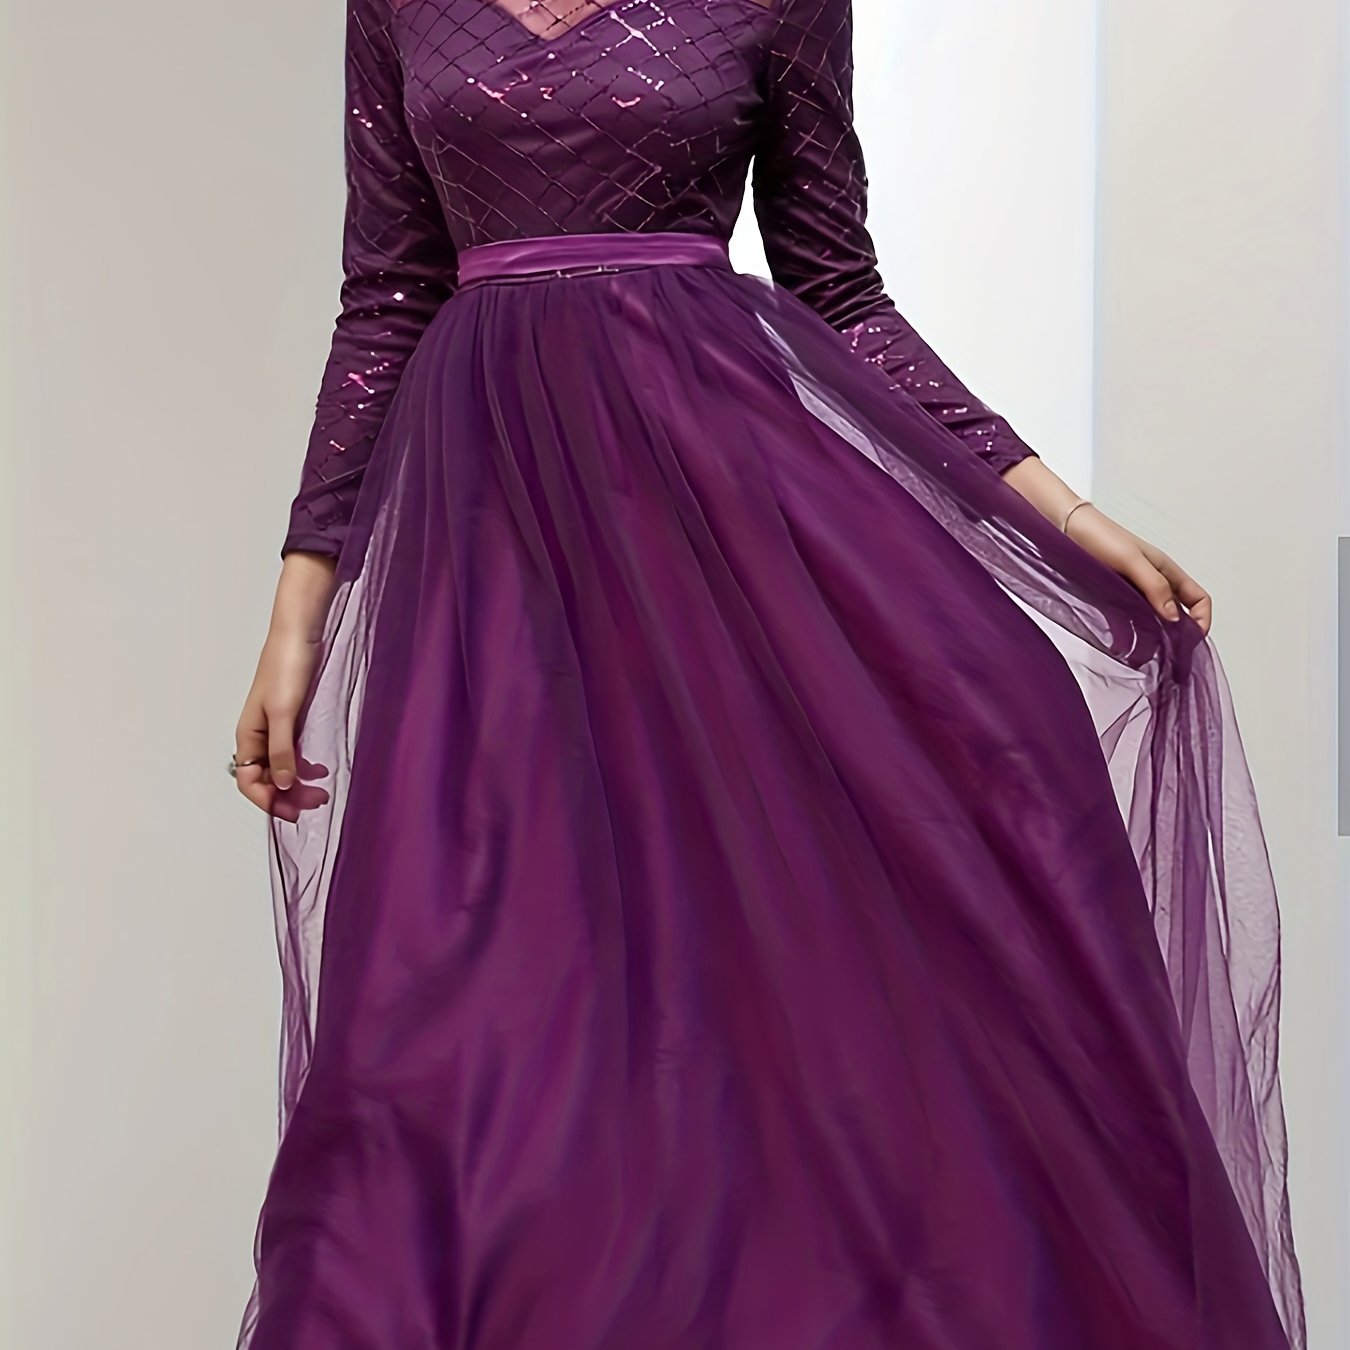 Antmvs Plus Size Elegant Wedding Guest Dress, Women's Plus Glitter Sequin Decor Long Sleeve Mesh Overlay Party Formal Dress